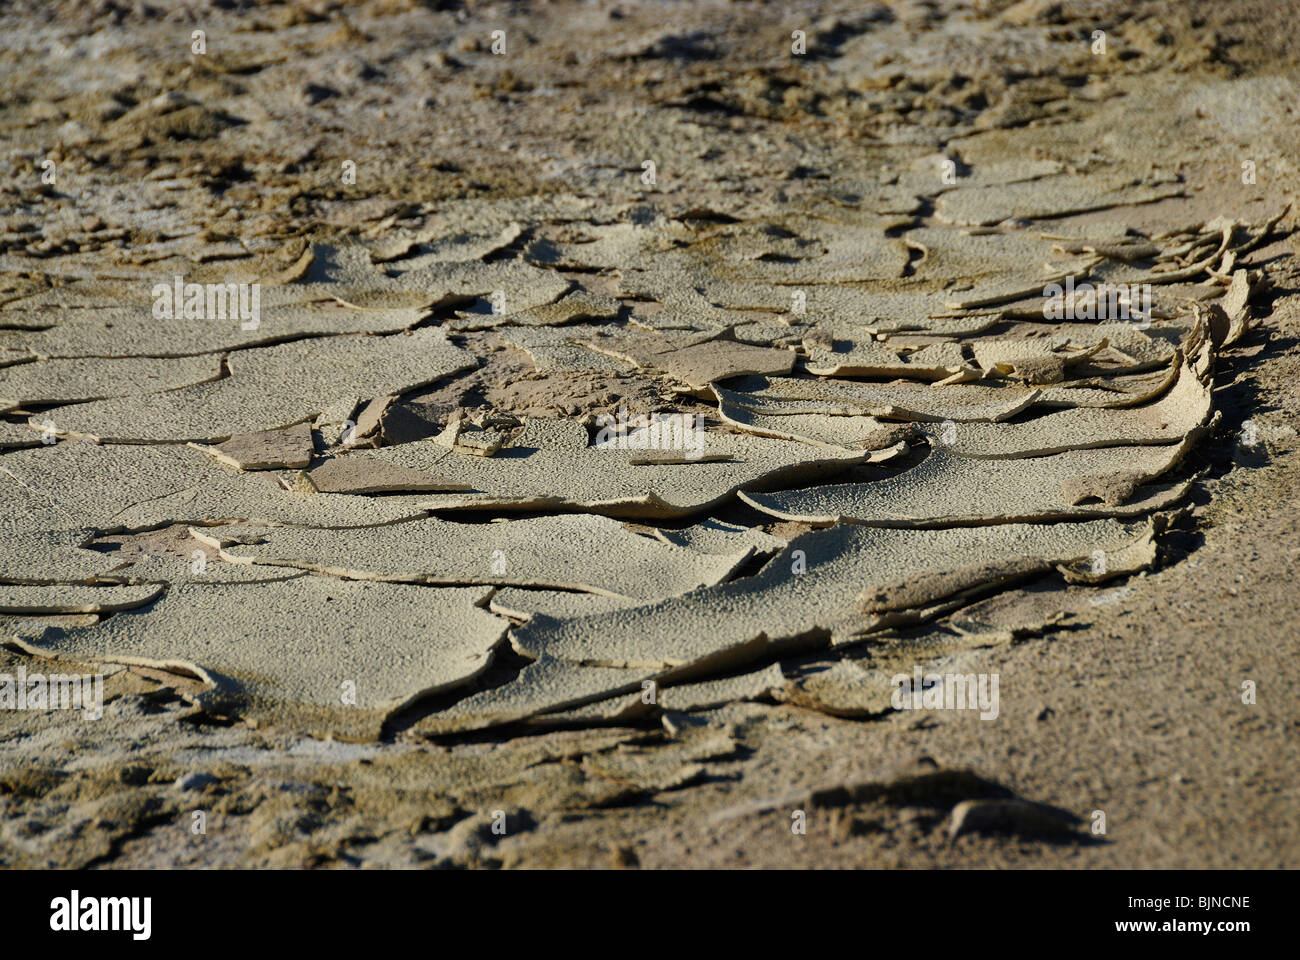 Vista panoramica di Salt Creek nella Death Valley, California State Foto Stock